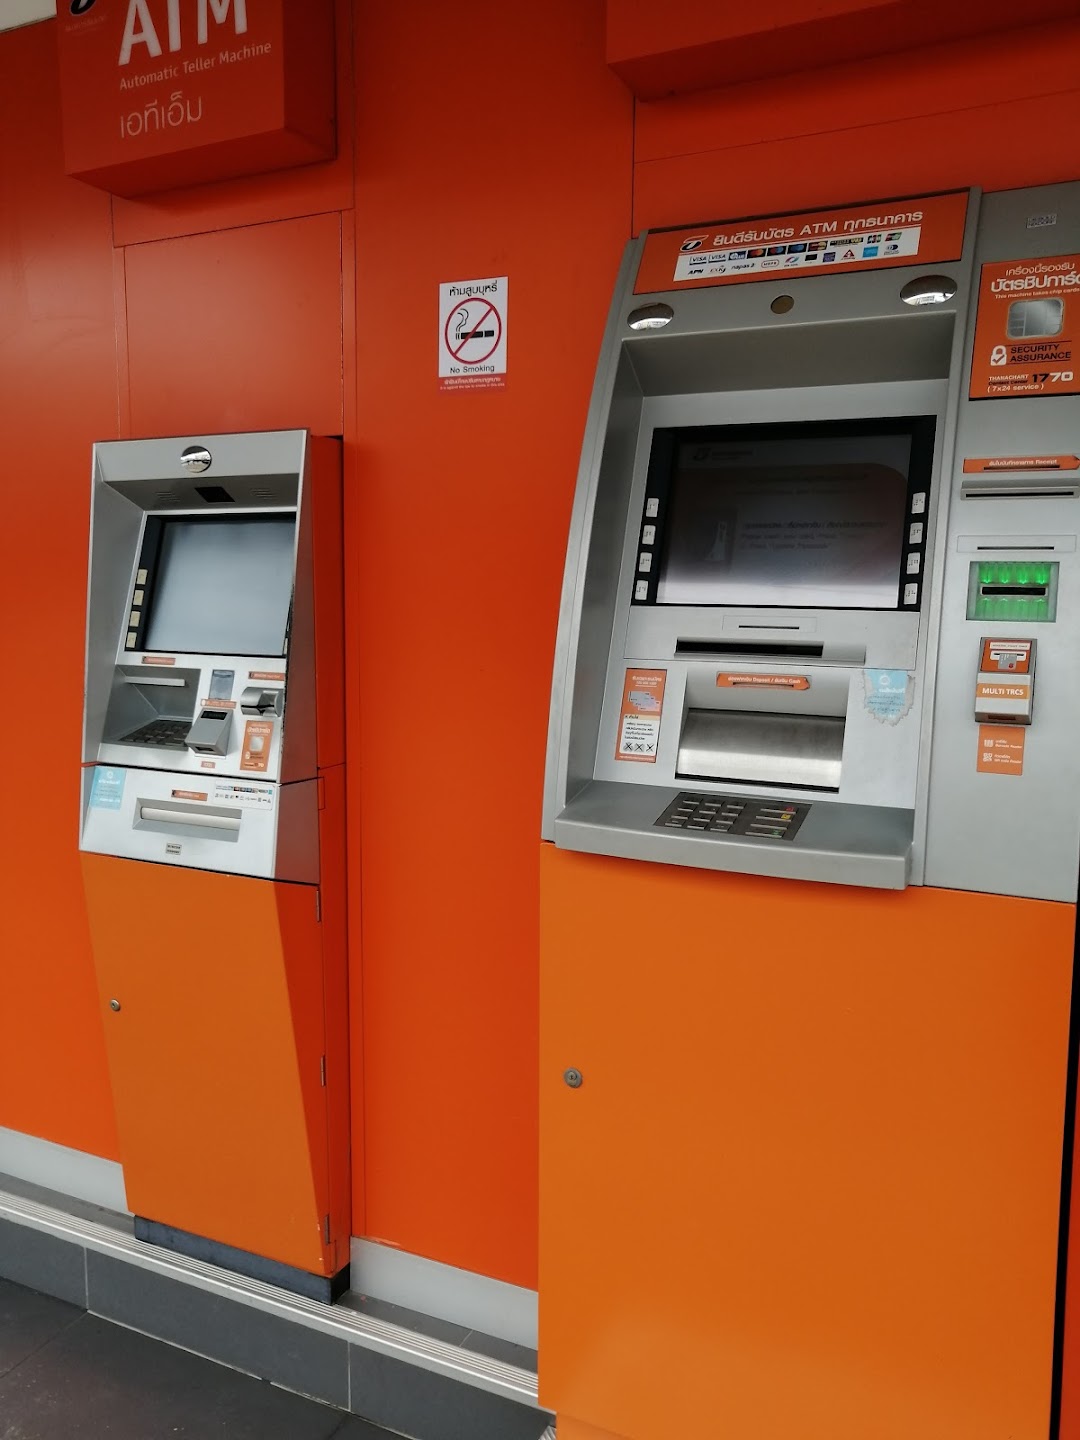 ATM Thanachart Bank